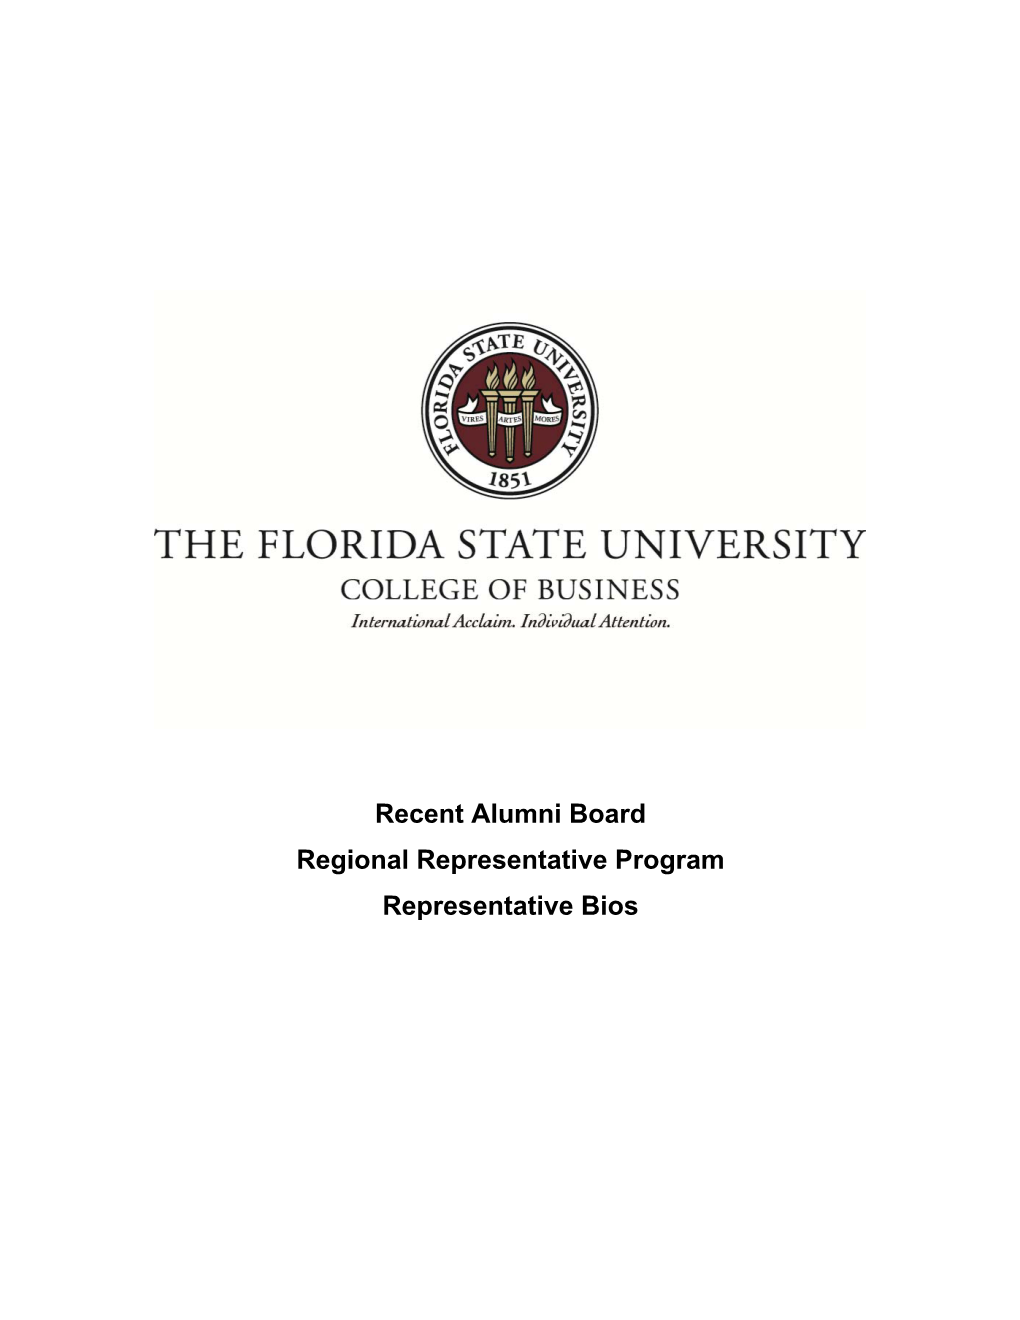 Recent Alumni Board Regional Representative Program Representative Bios